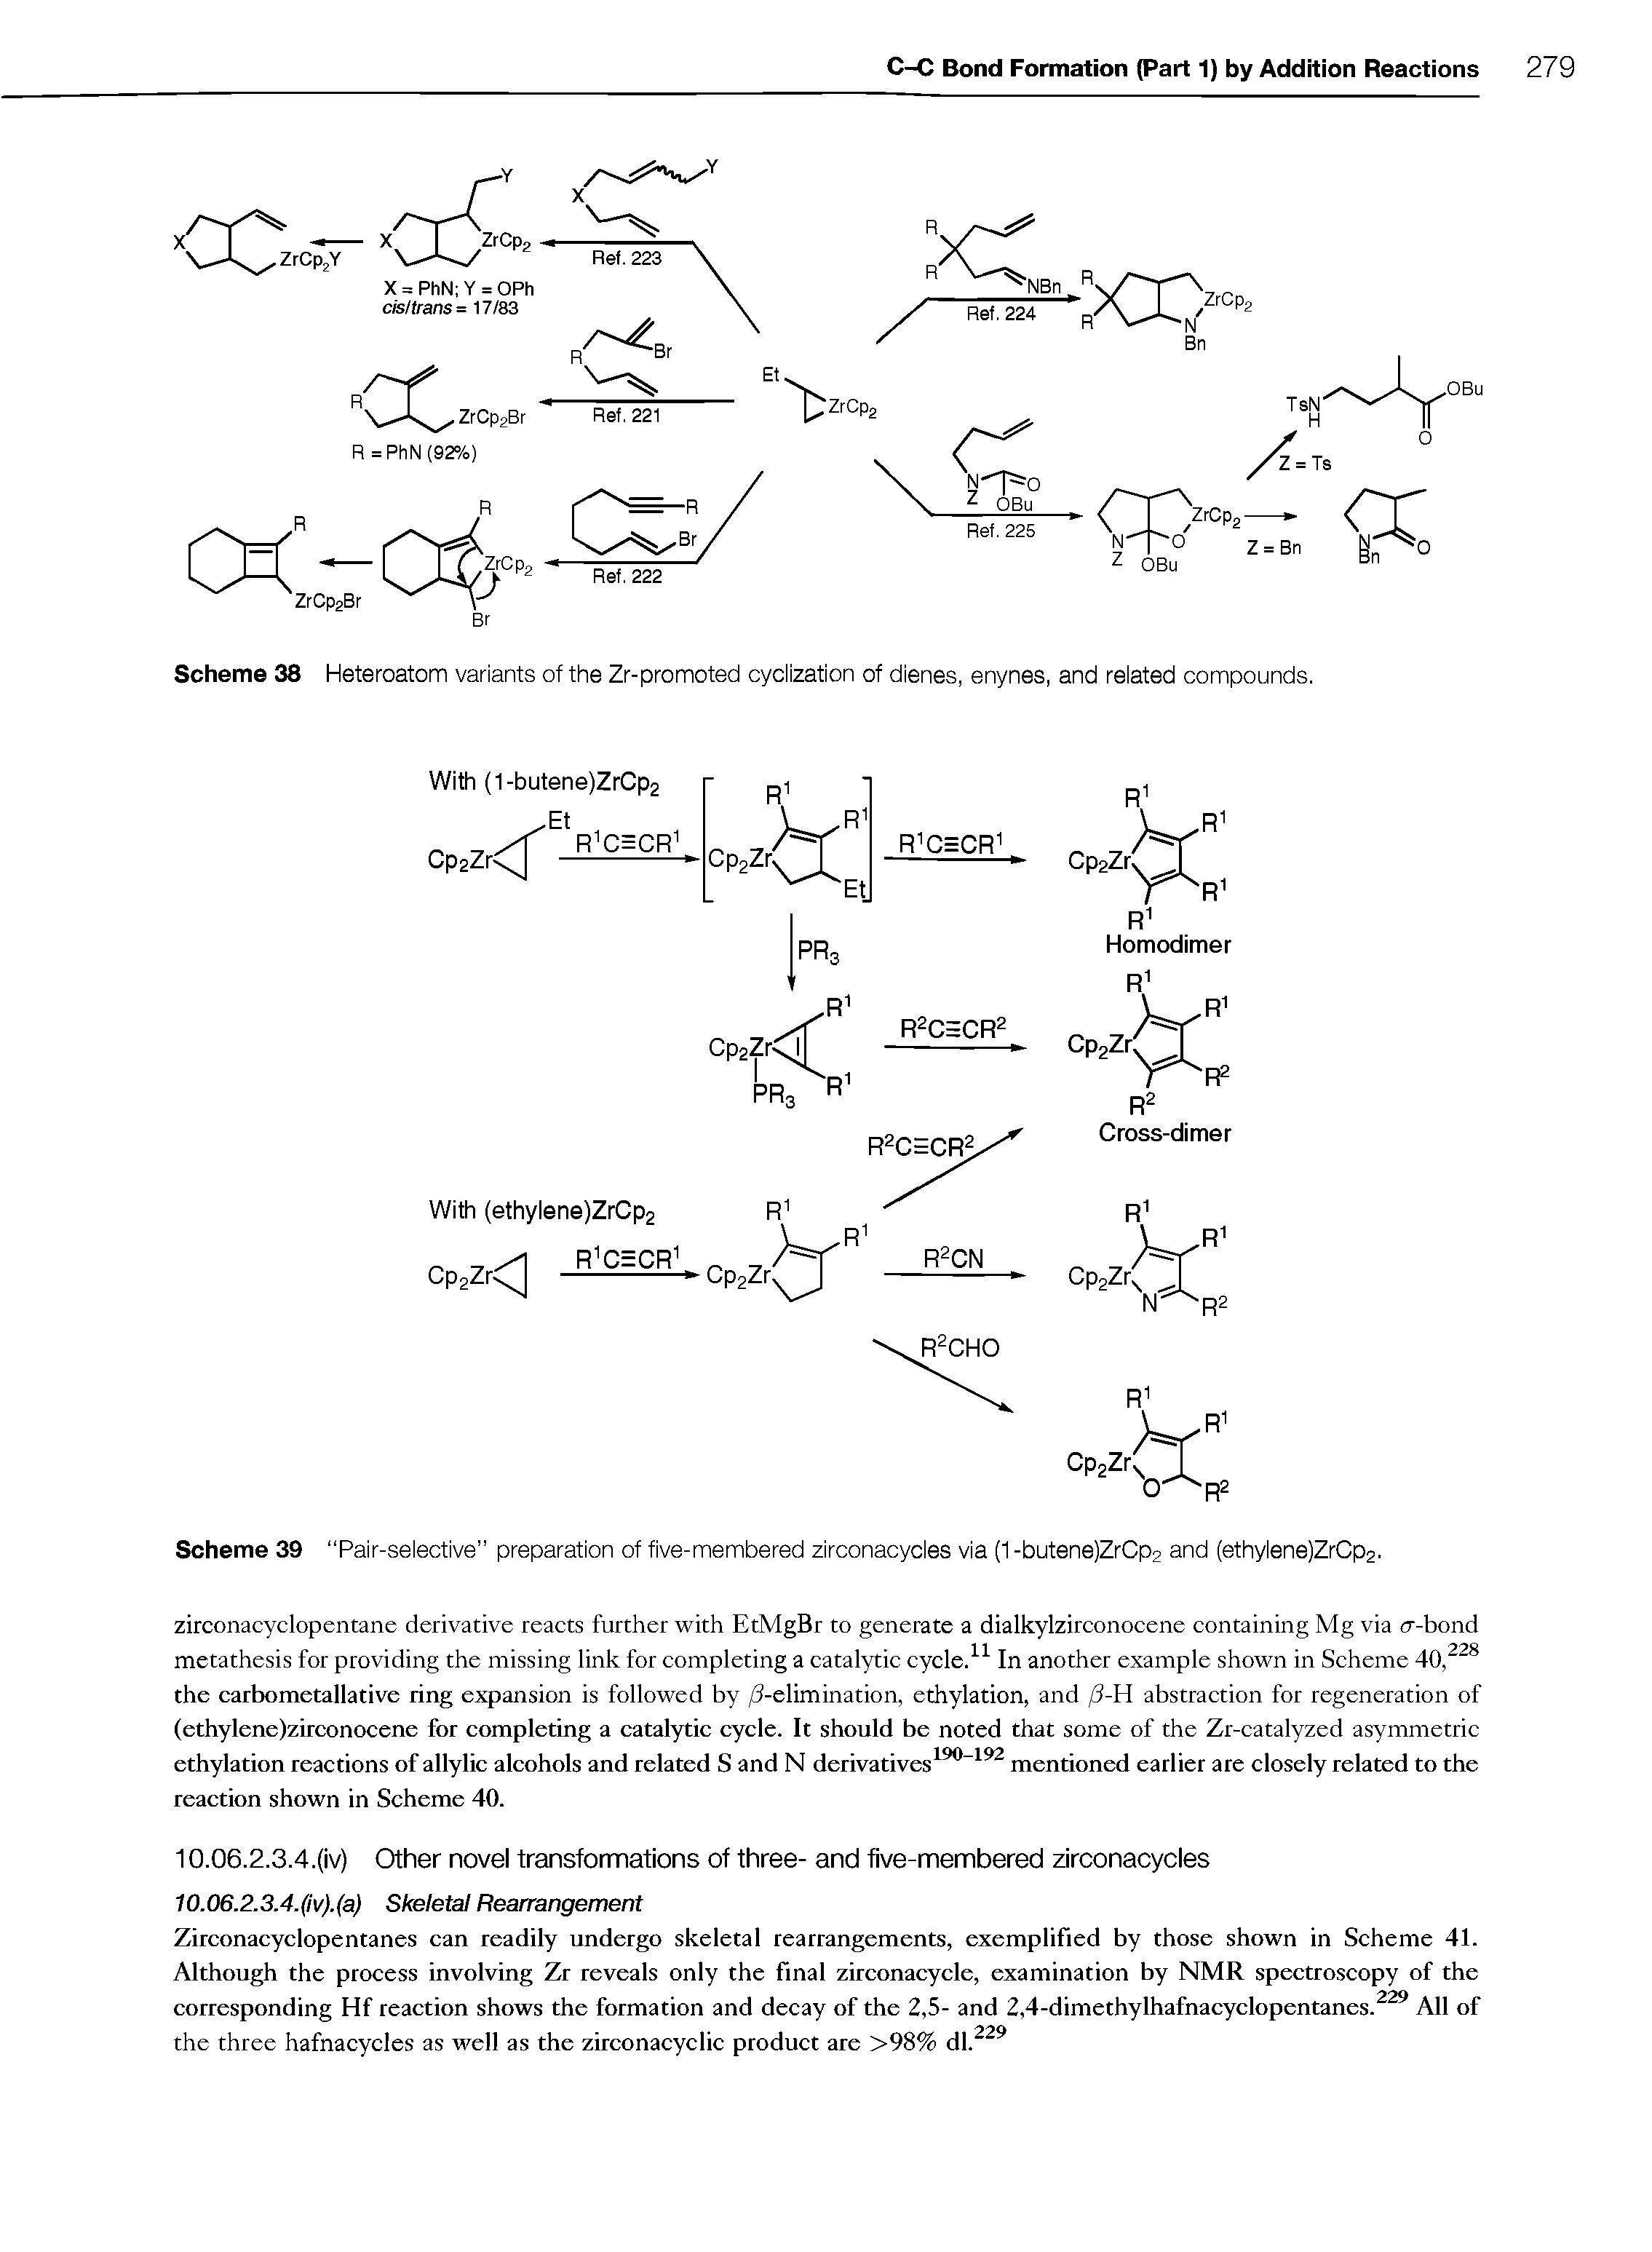 Scheme 39 Pair-selective preparation of five-membered zirconacycles via (1 -butene)ZrCp2 and (ethylene)ZrCp2.